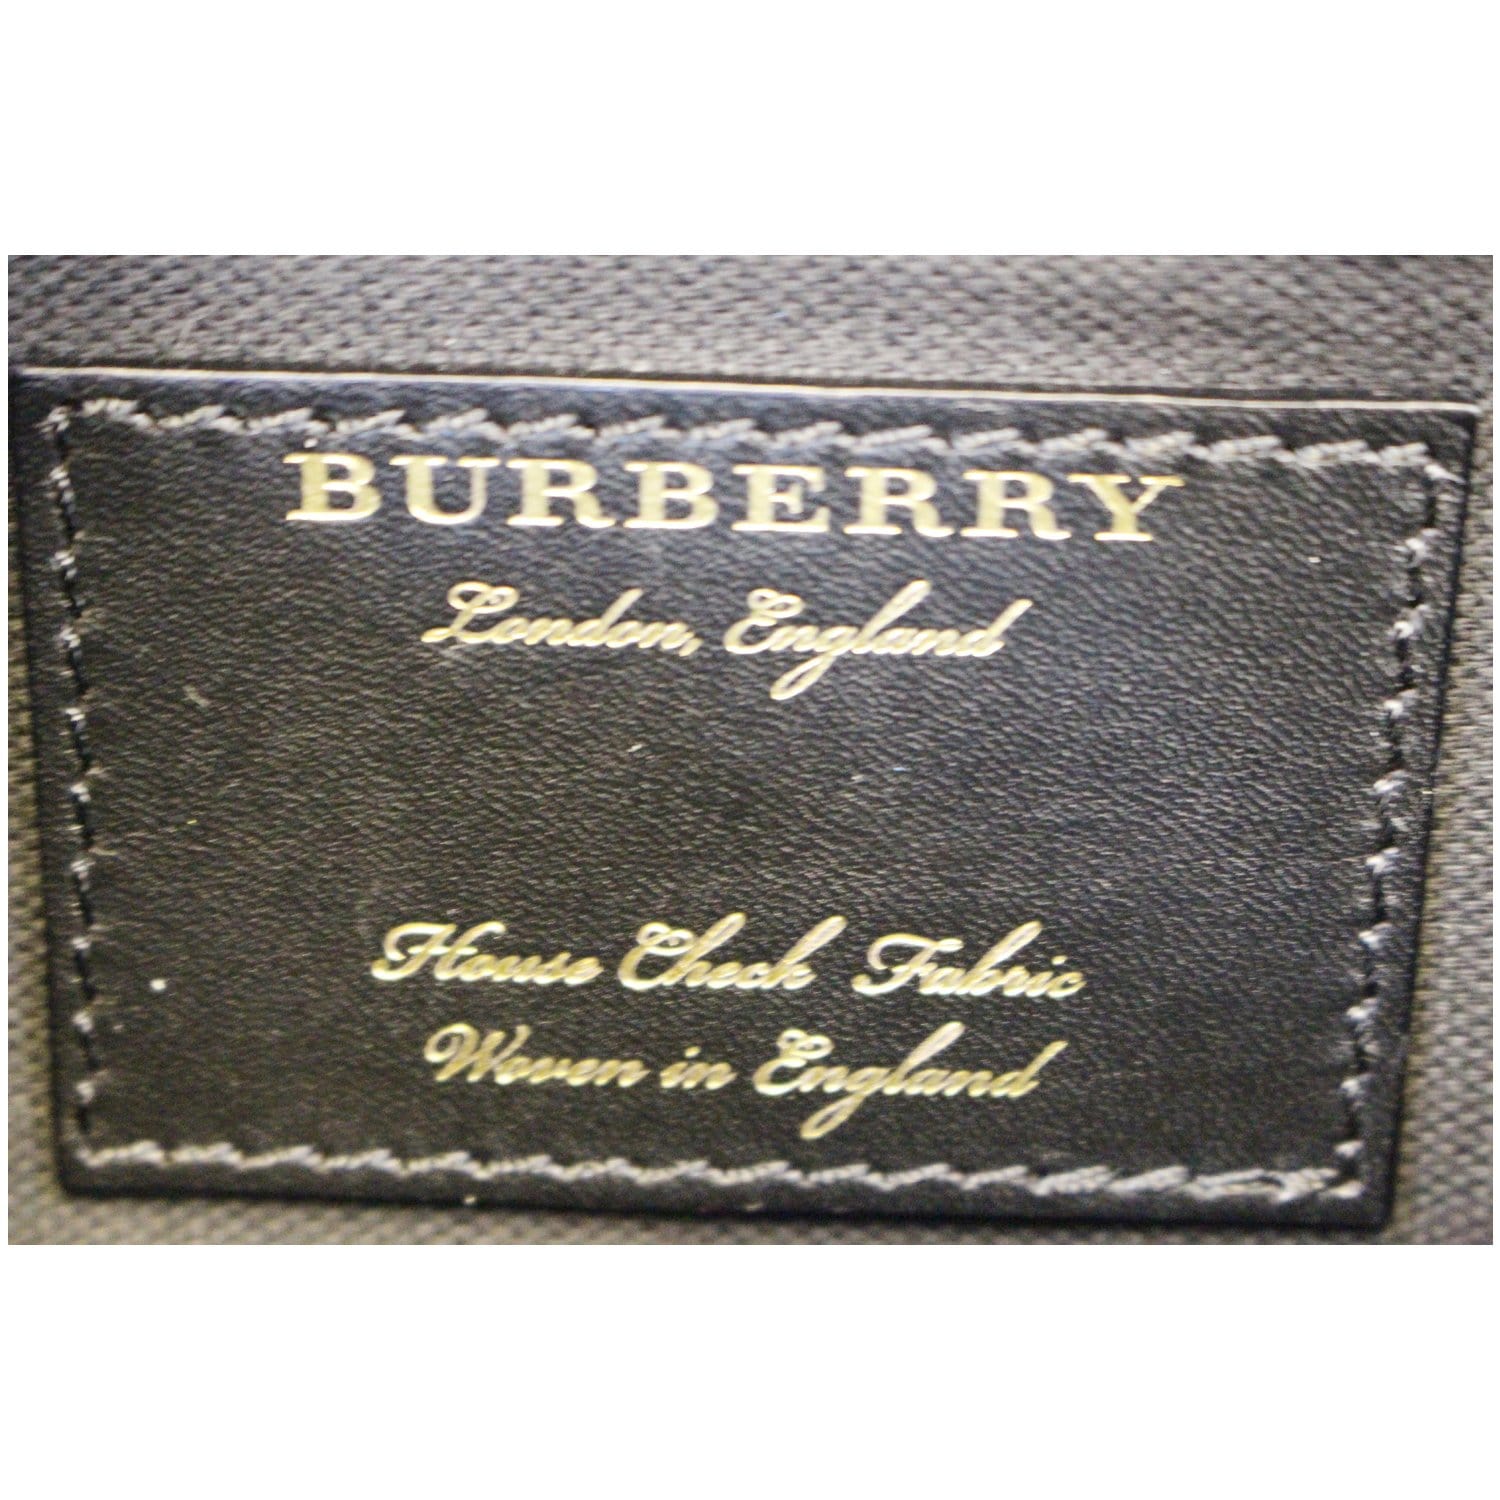 Genuine Vintage Burberrys Bag Fabric and Genuine Leather -  UK